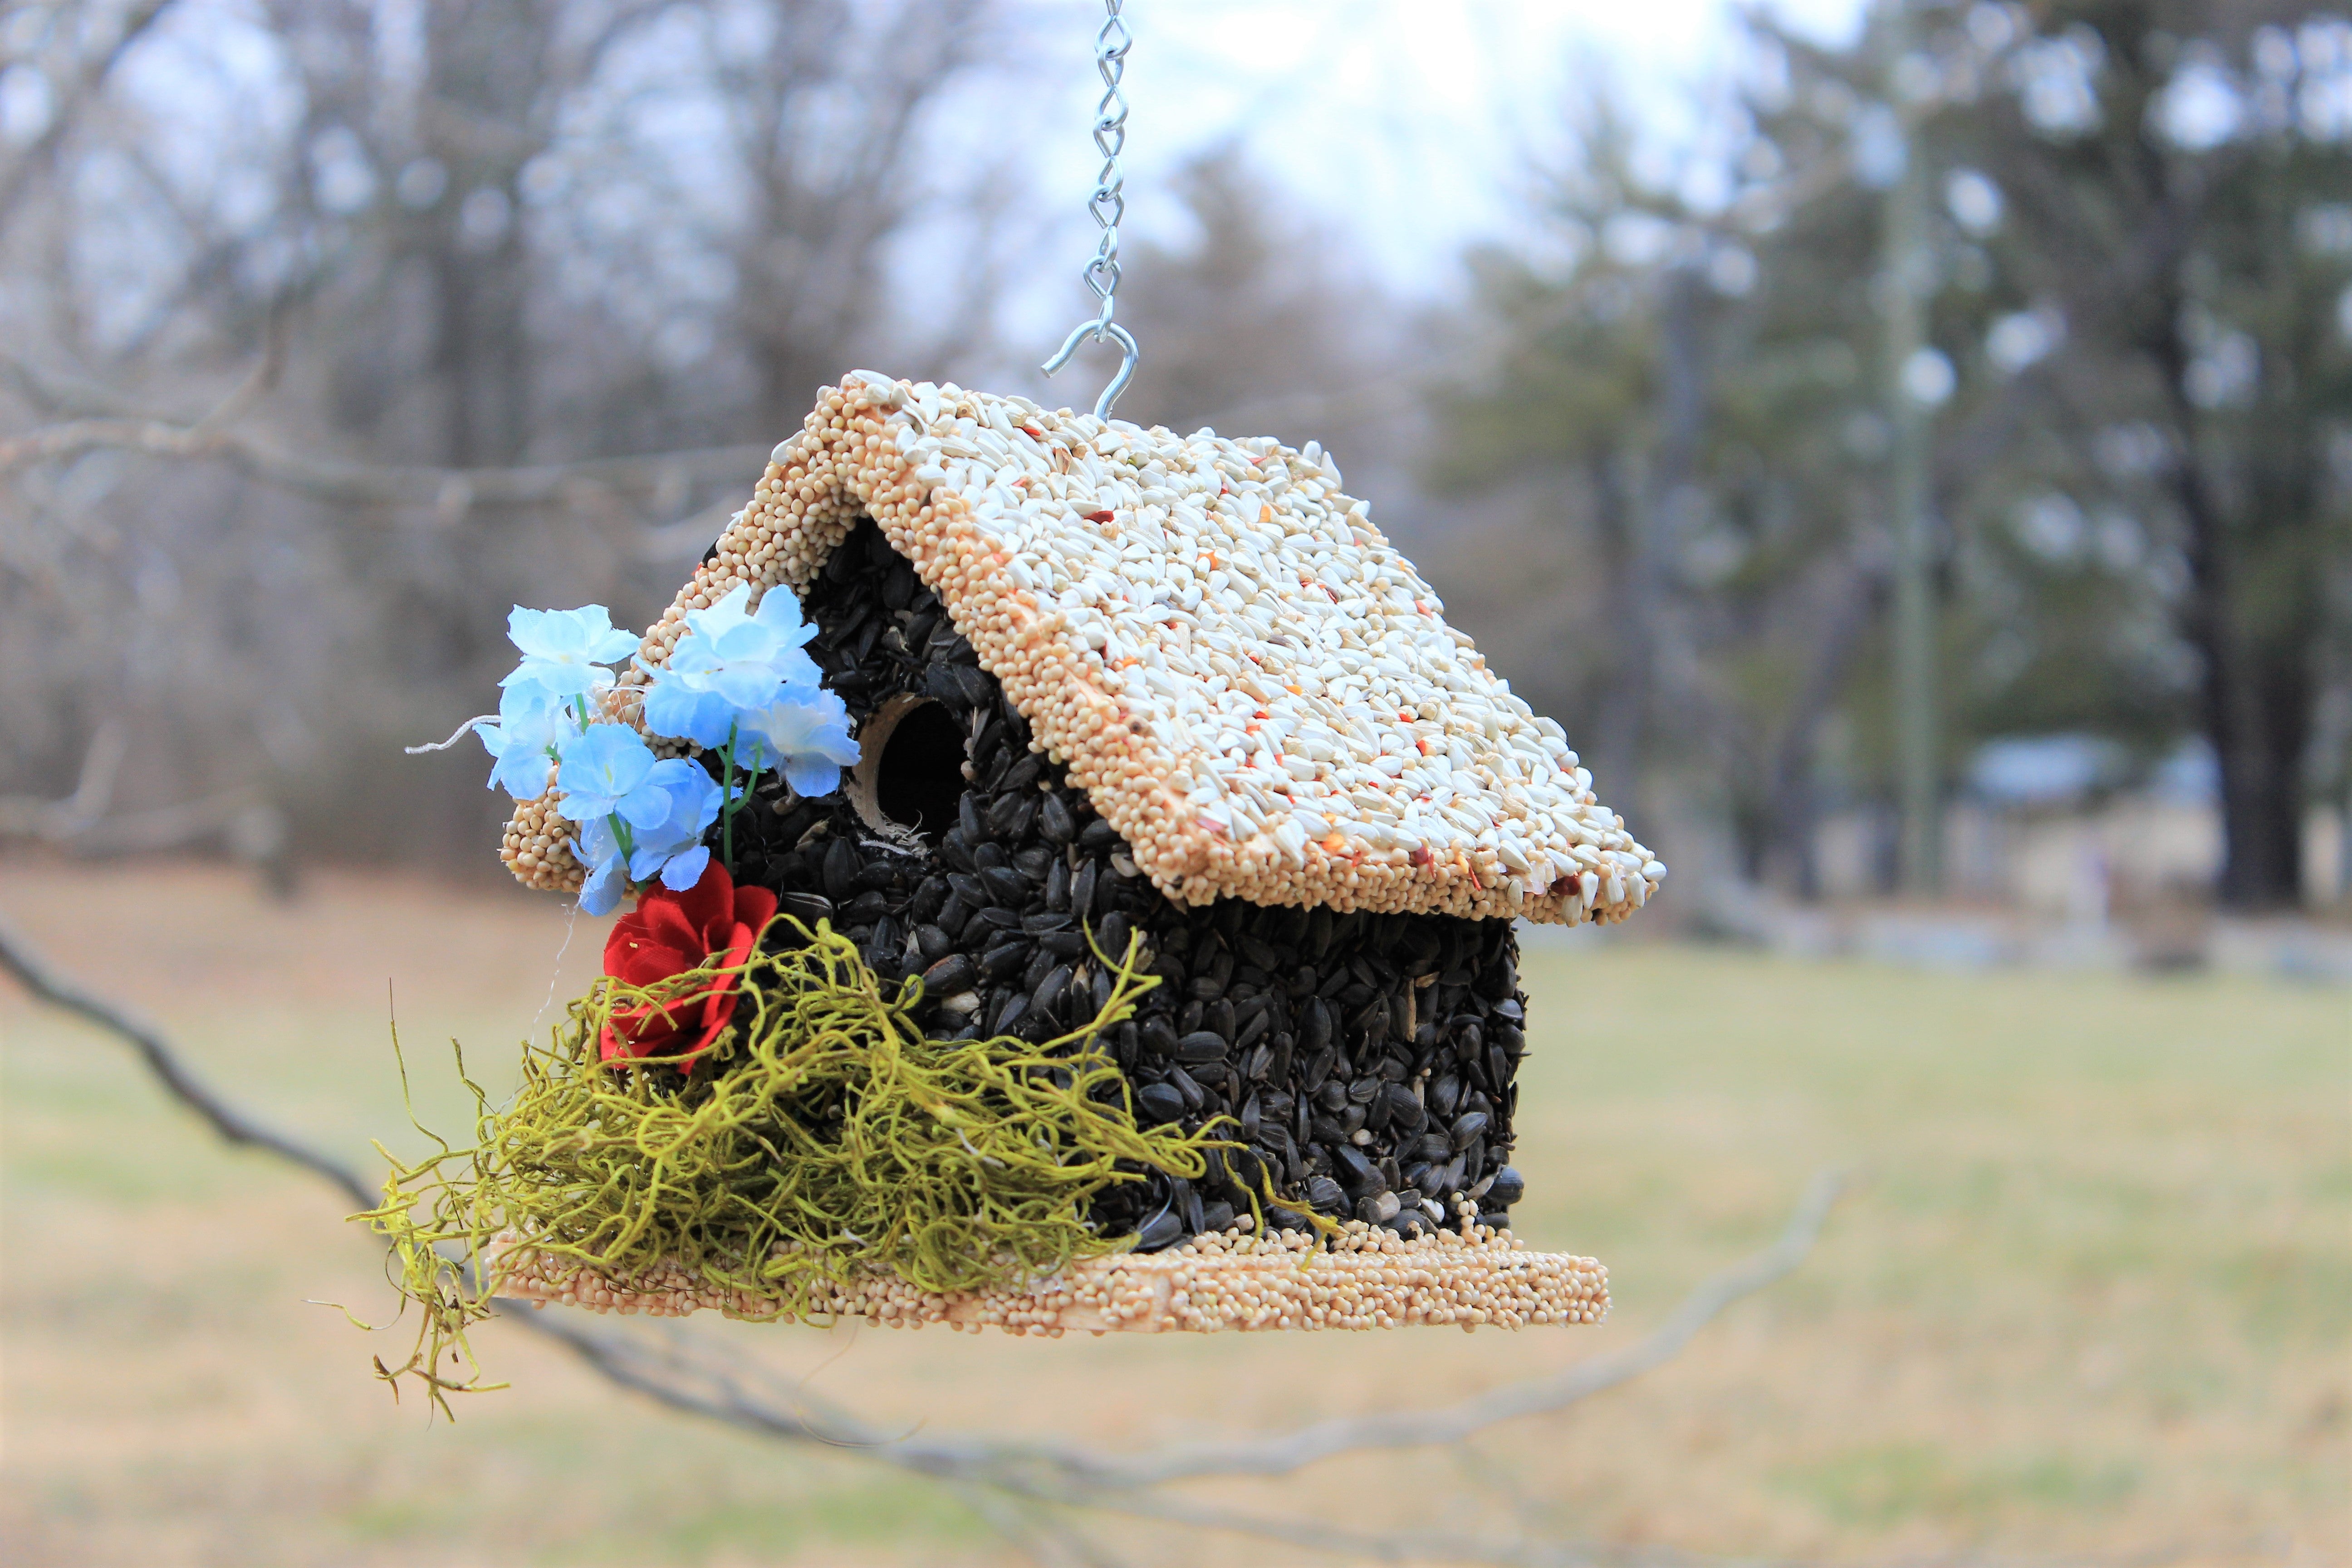 Edible Bird Feeder - Light Roof Short Birdhouse